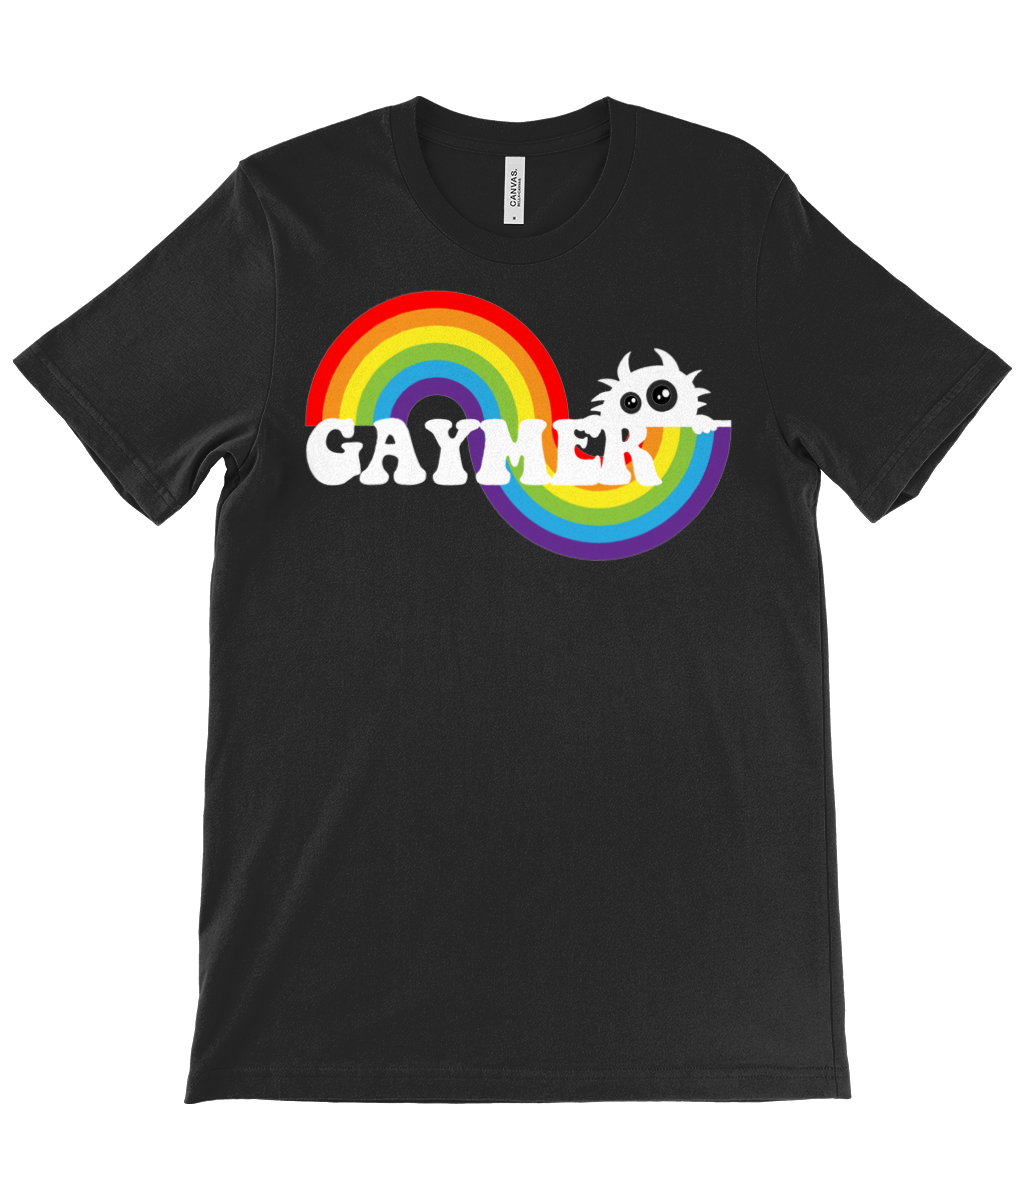 Proud Gaymer Unisex Crew Neck T-Shirt